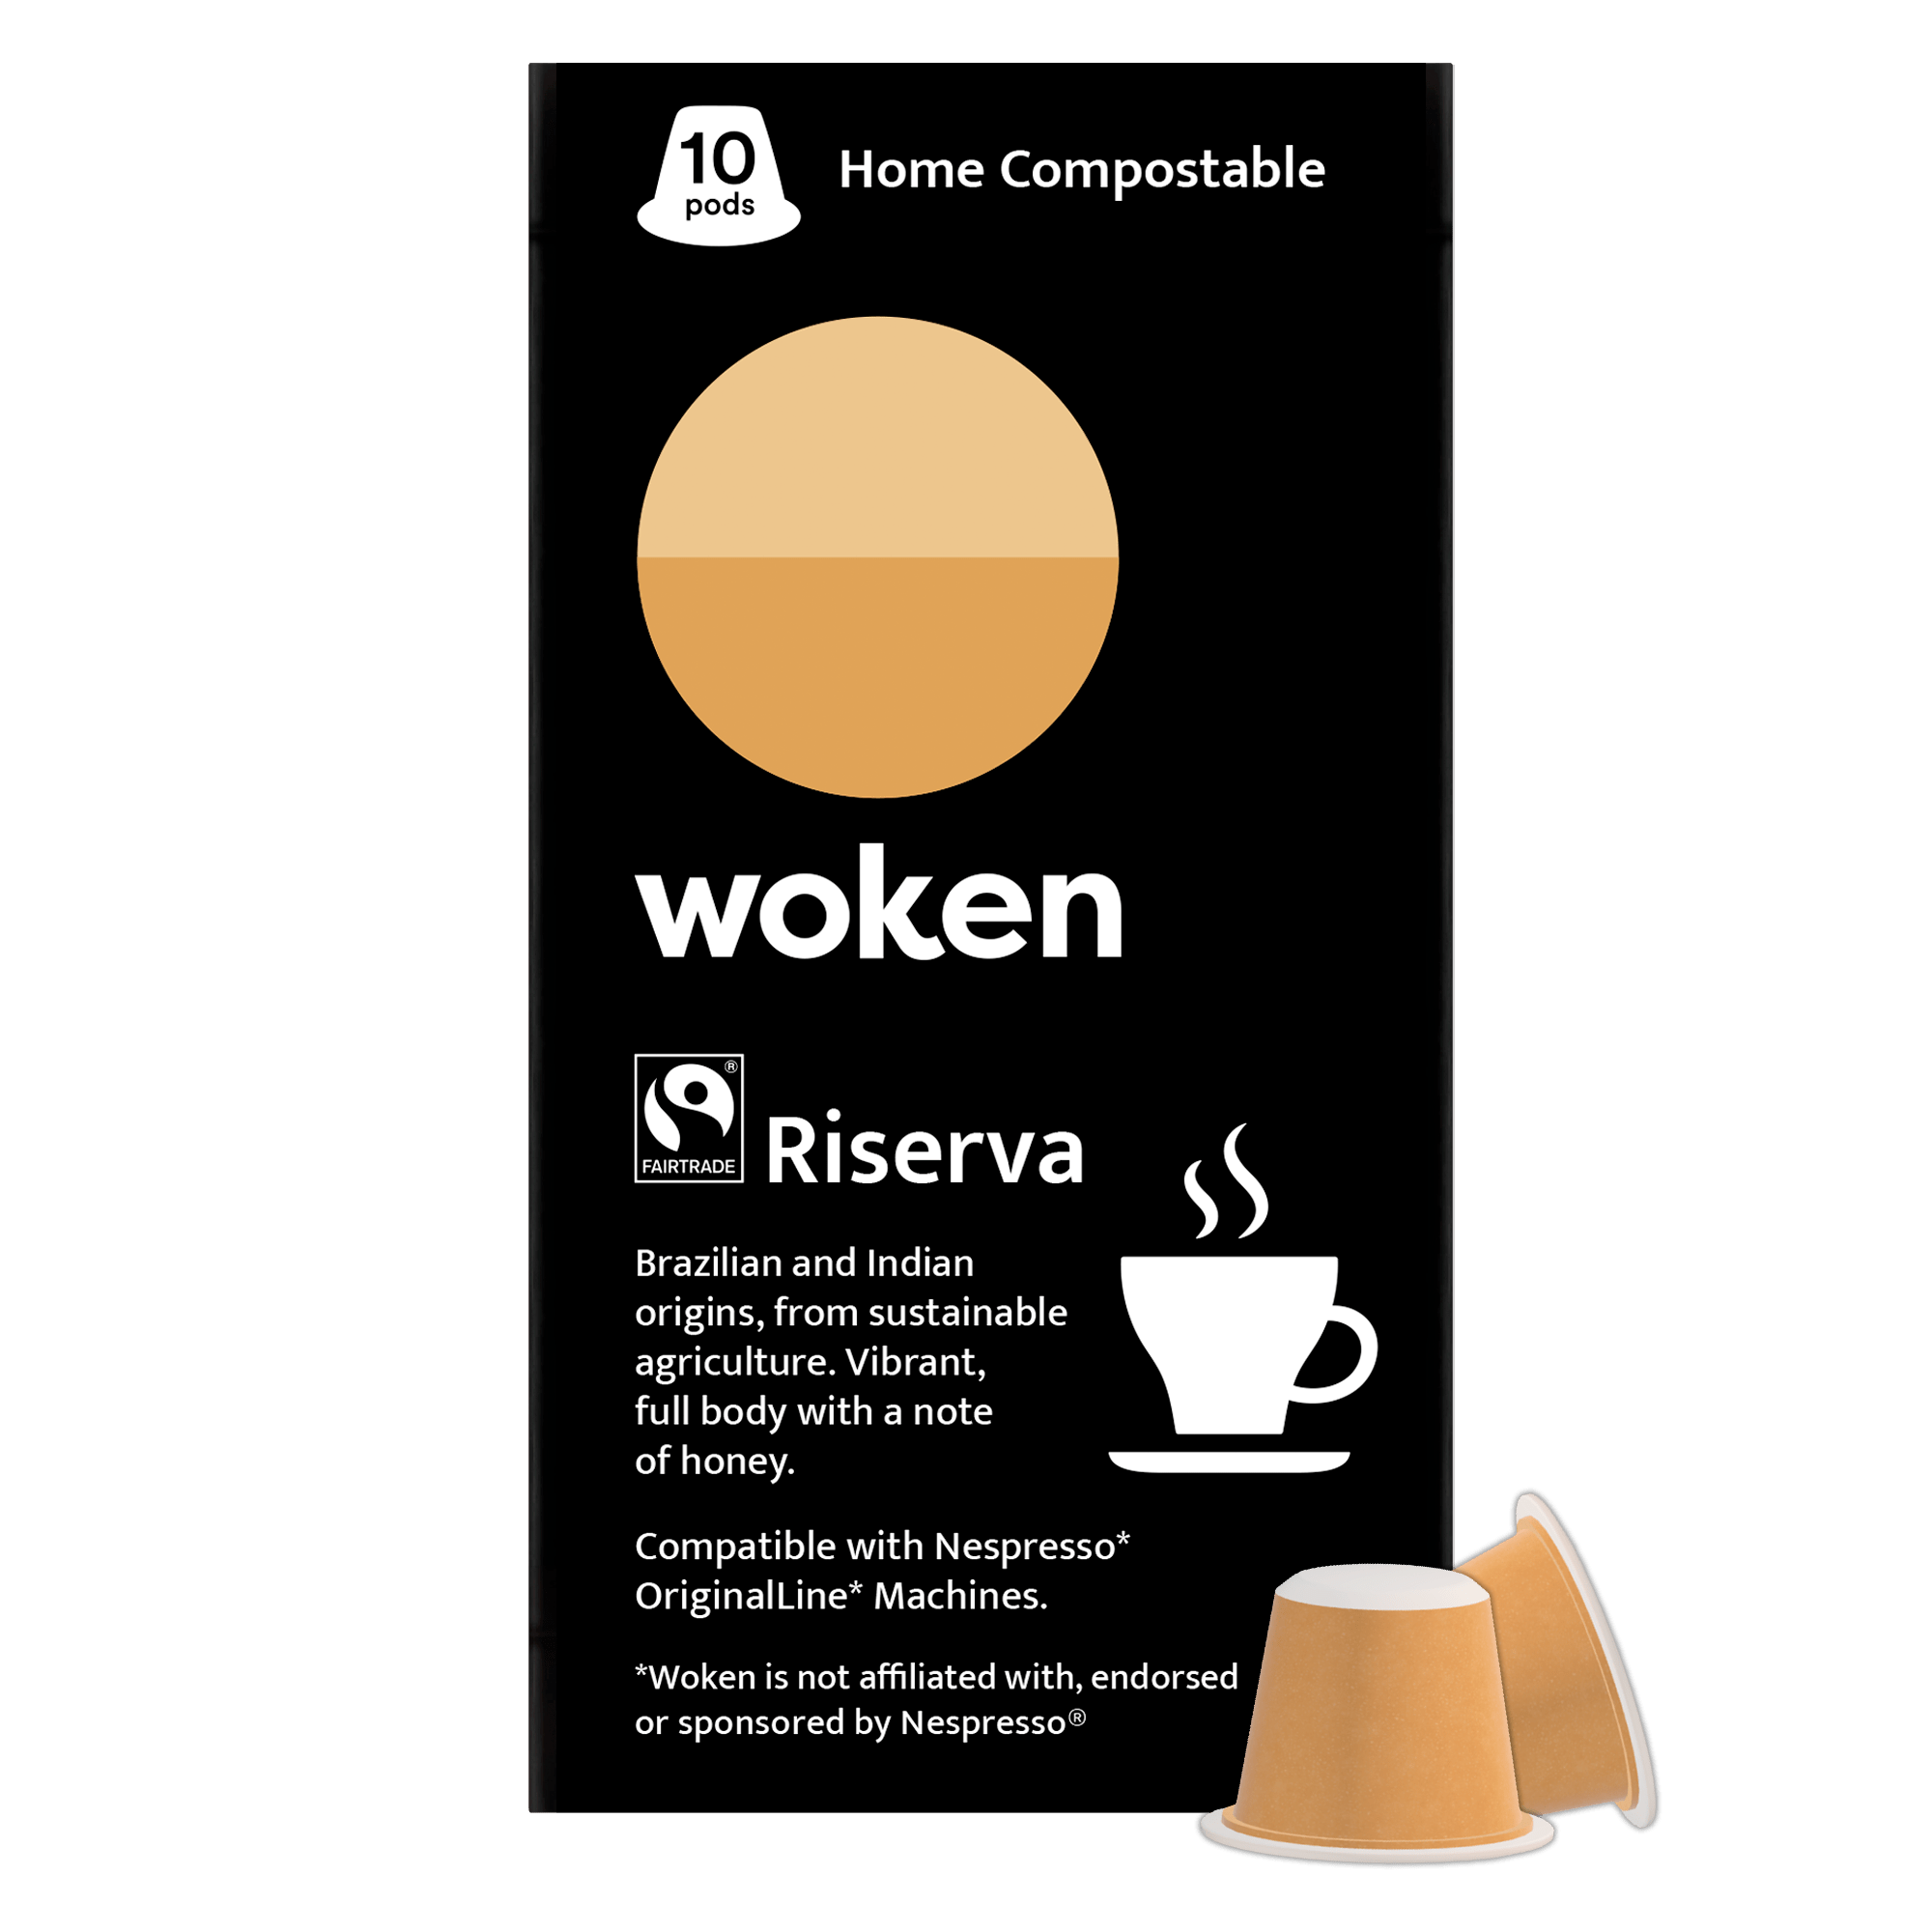 Woken-coffee Riserva Carton Case Nespresso Orginalline Compostable Coffee Pods Eco-friendly nespresso pods Biodegradable coffee pods